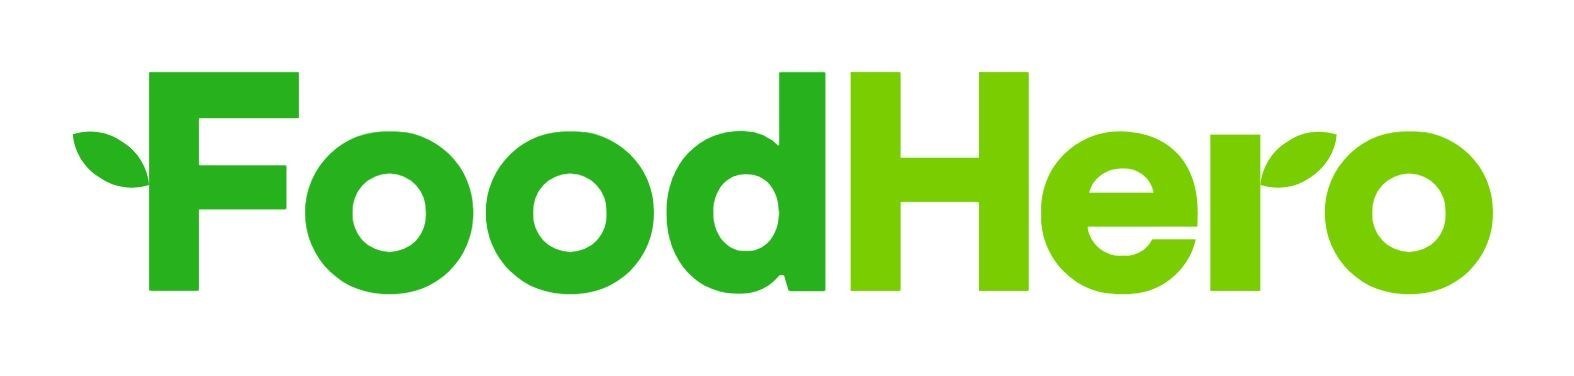 Metro FoodHero logo.jpg